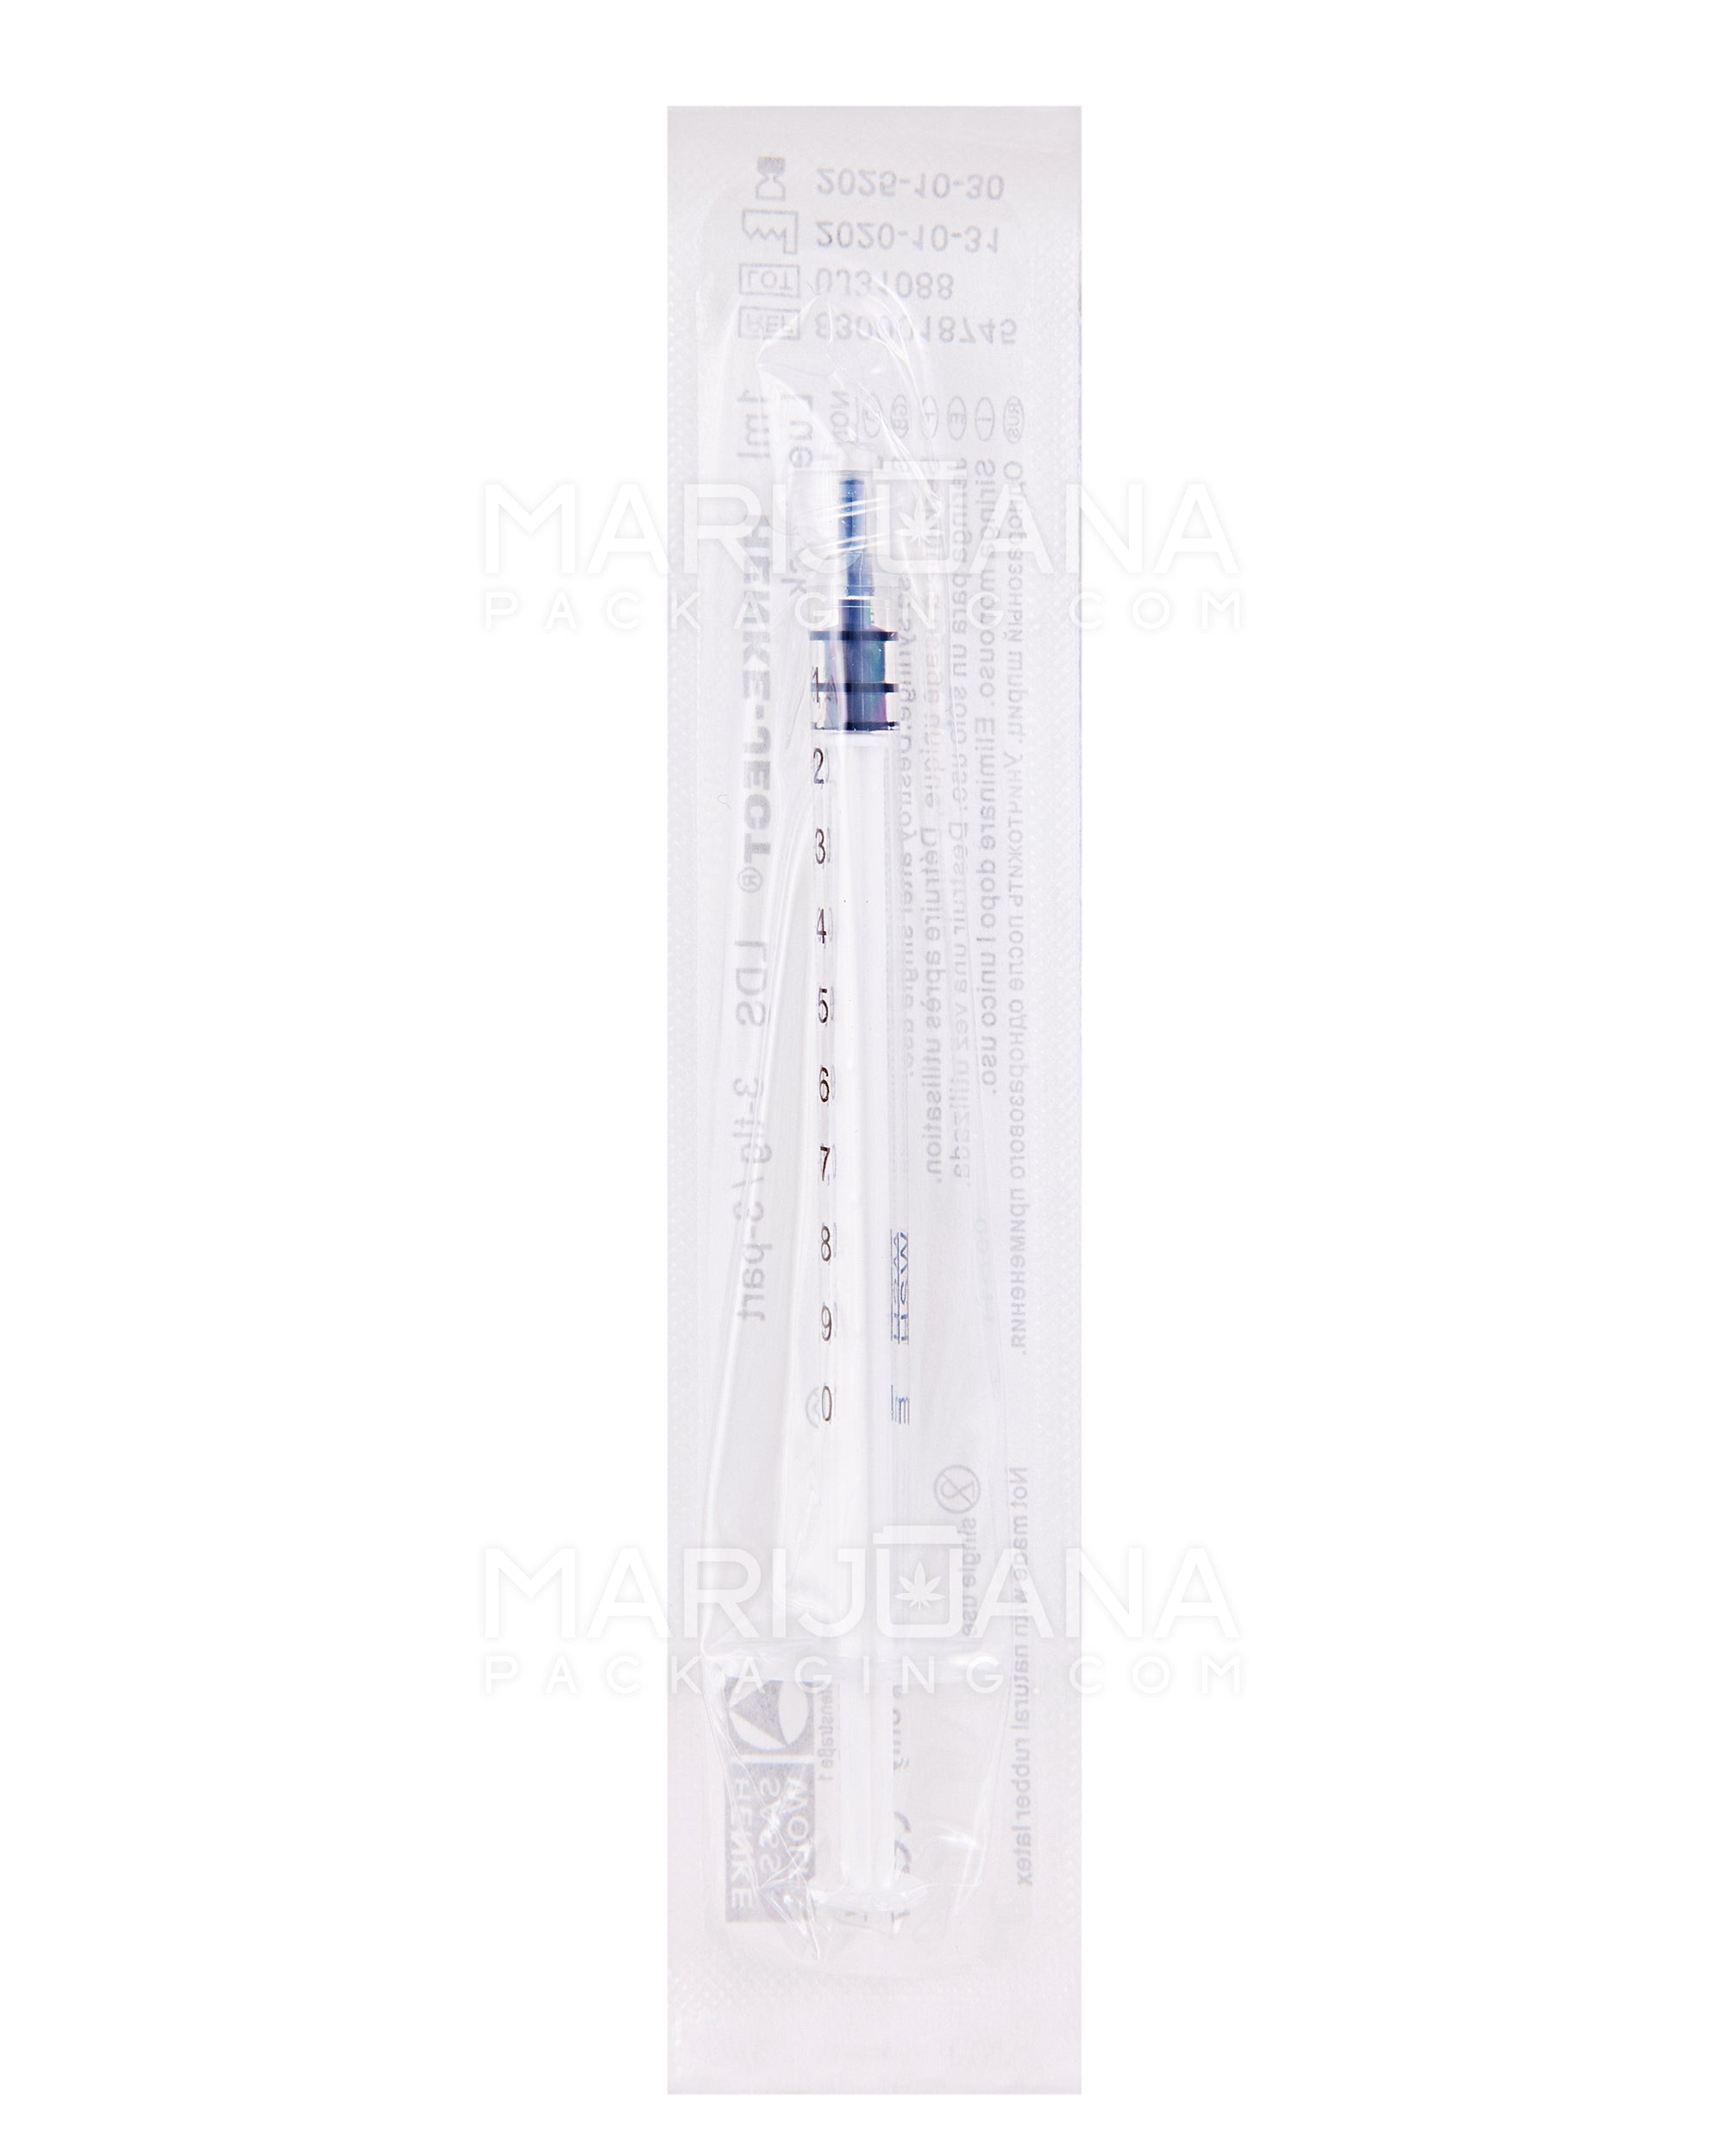 Luer Lock | Plastic Dab Applicator Syringes | 1mL - 0.1mL Increments - 100 Count - 10